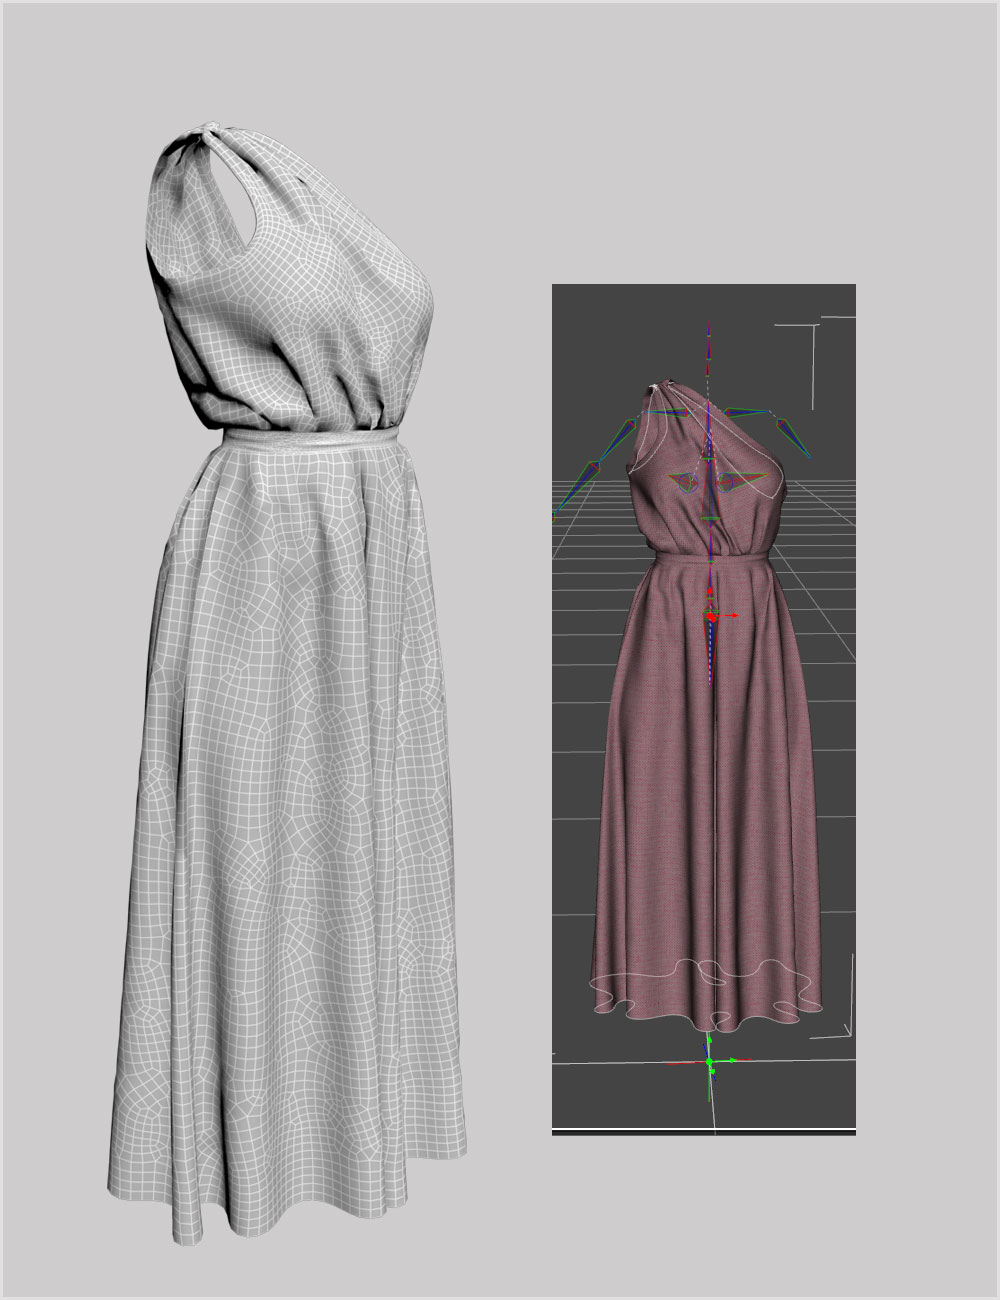 dForce Roma Dress for Genesis 8 Female(s) by: Cute3D, 3D Models by Daz 3D